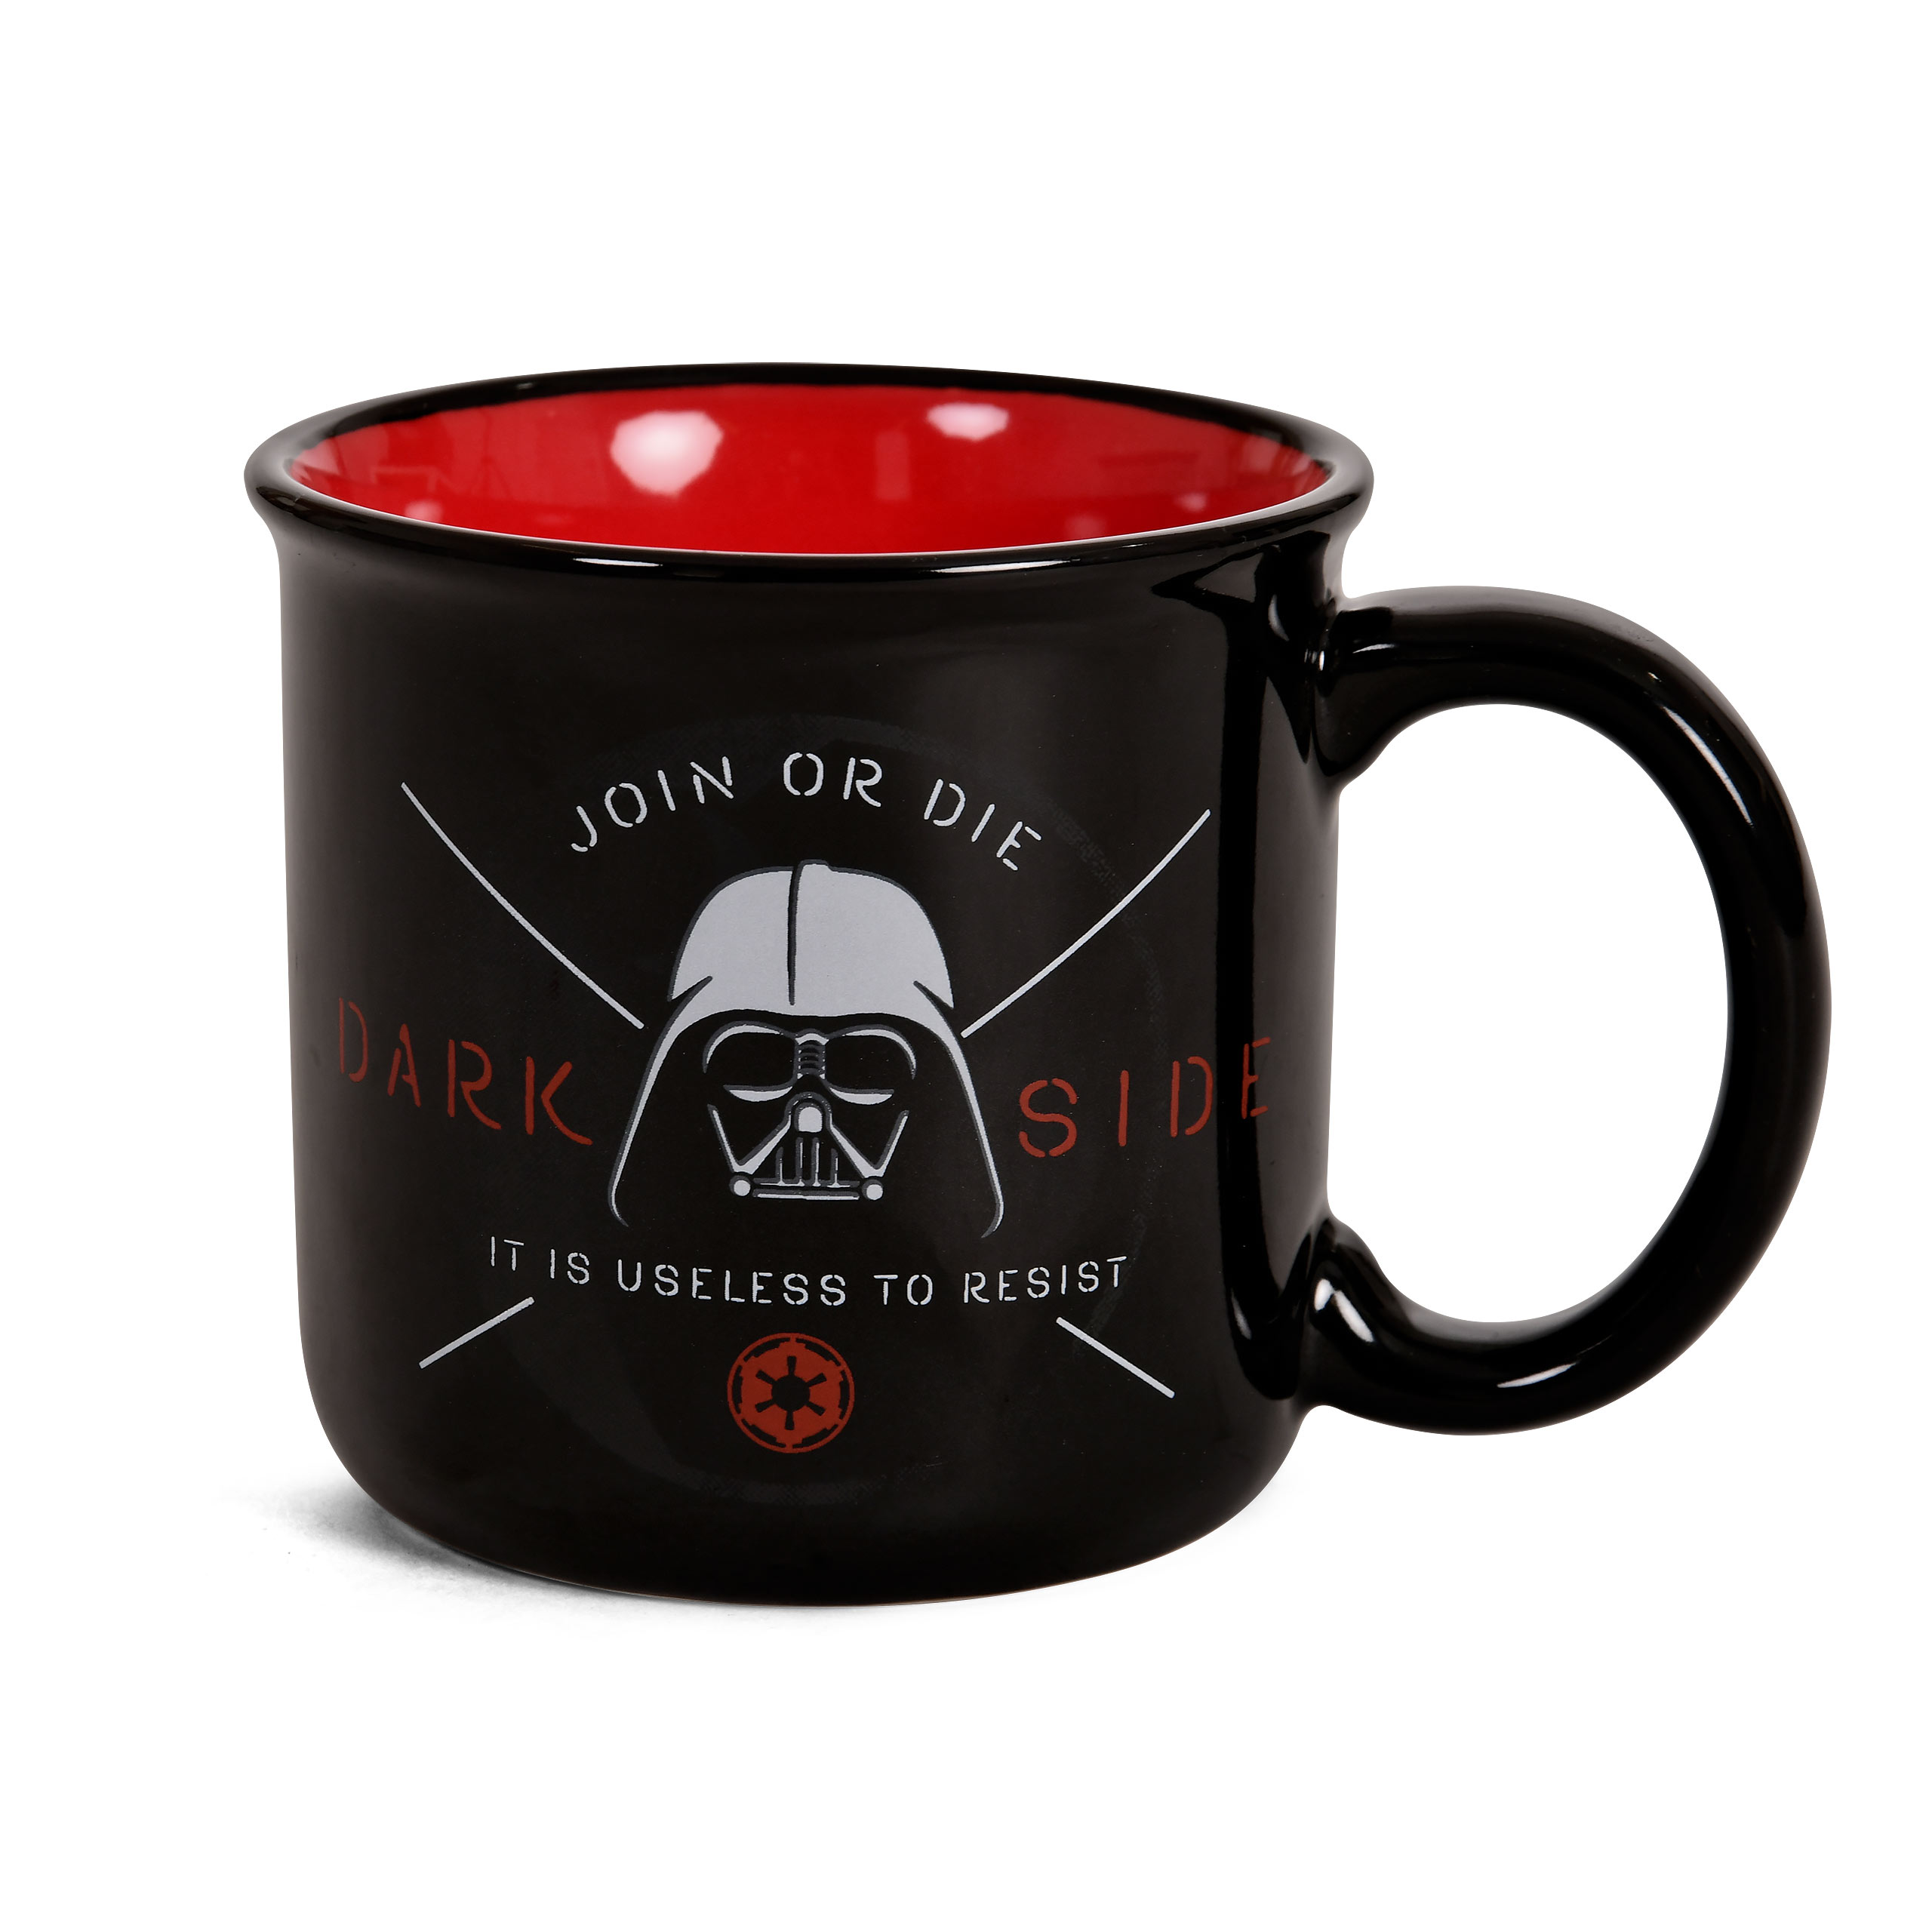 Star Wars Darth Vader & Stormtrooper Single Cup Coffee Maker & Mug